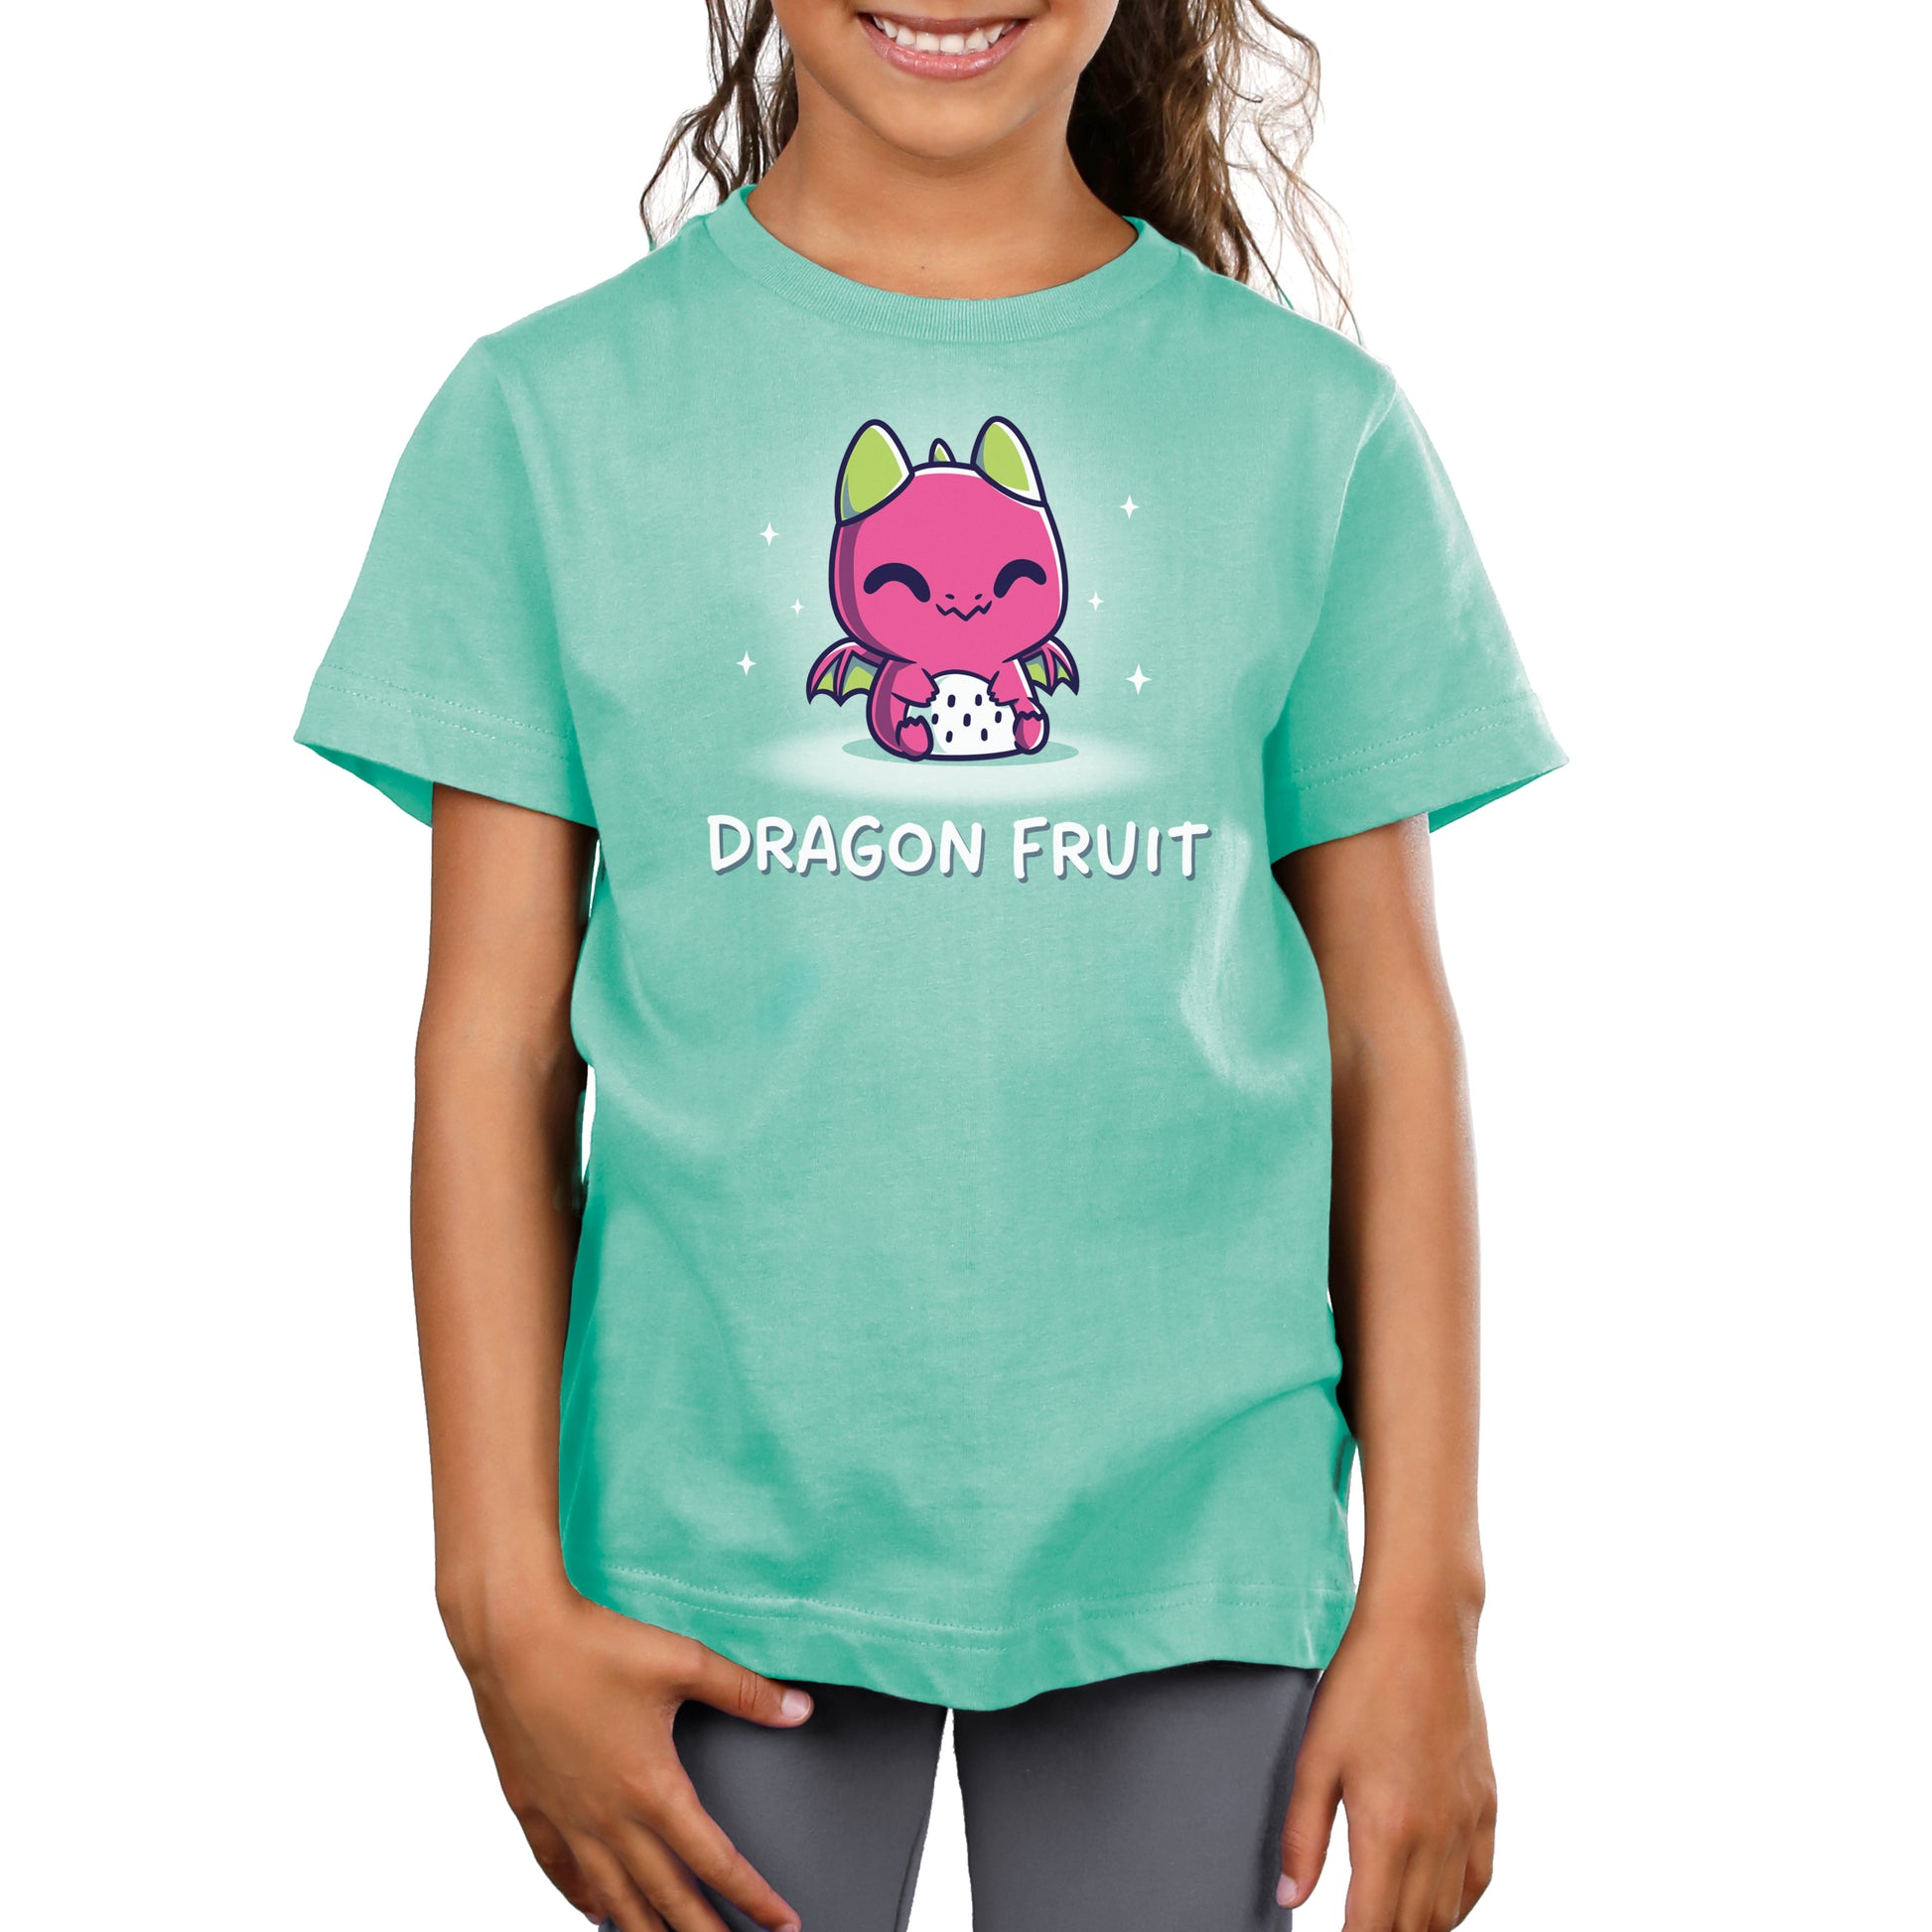 A girl wearing a TeeTurtle Saltwater Green Dragon Fruit t-shirt.